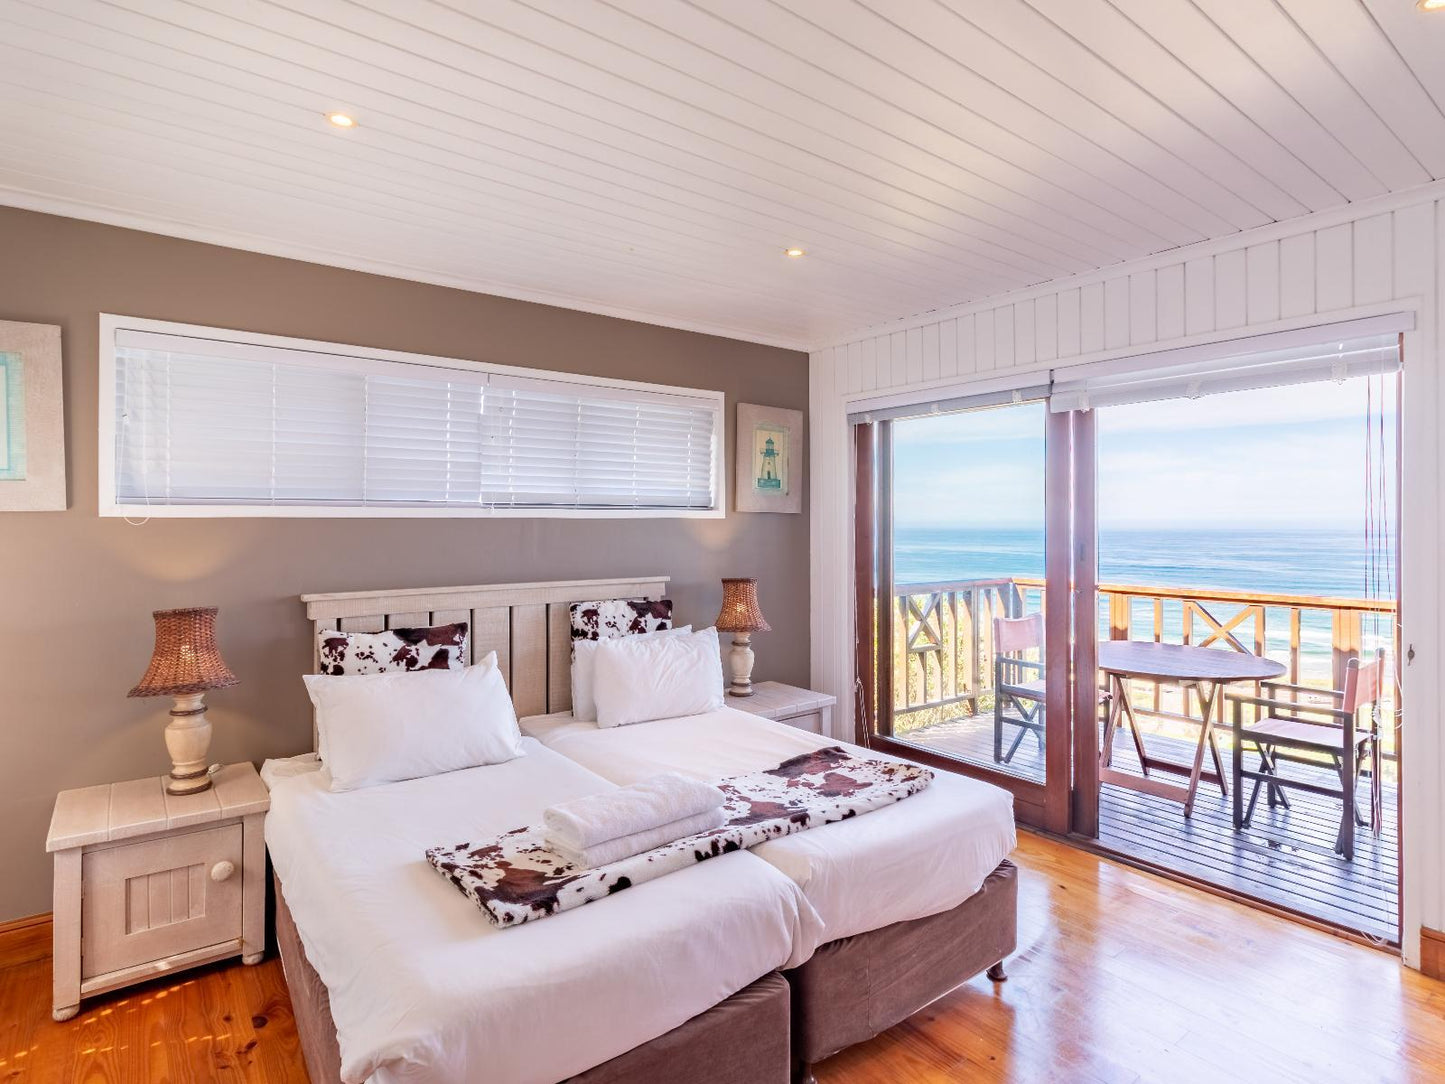 2 Bedroom Duplex Chalet - Sea Facing @ Boardwalk Lodge - Self Catering